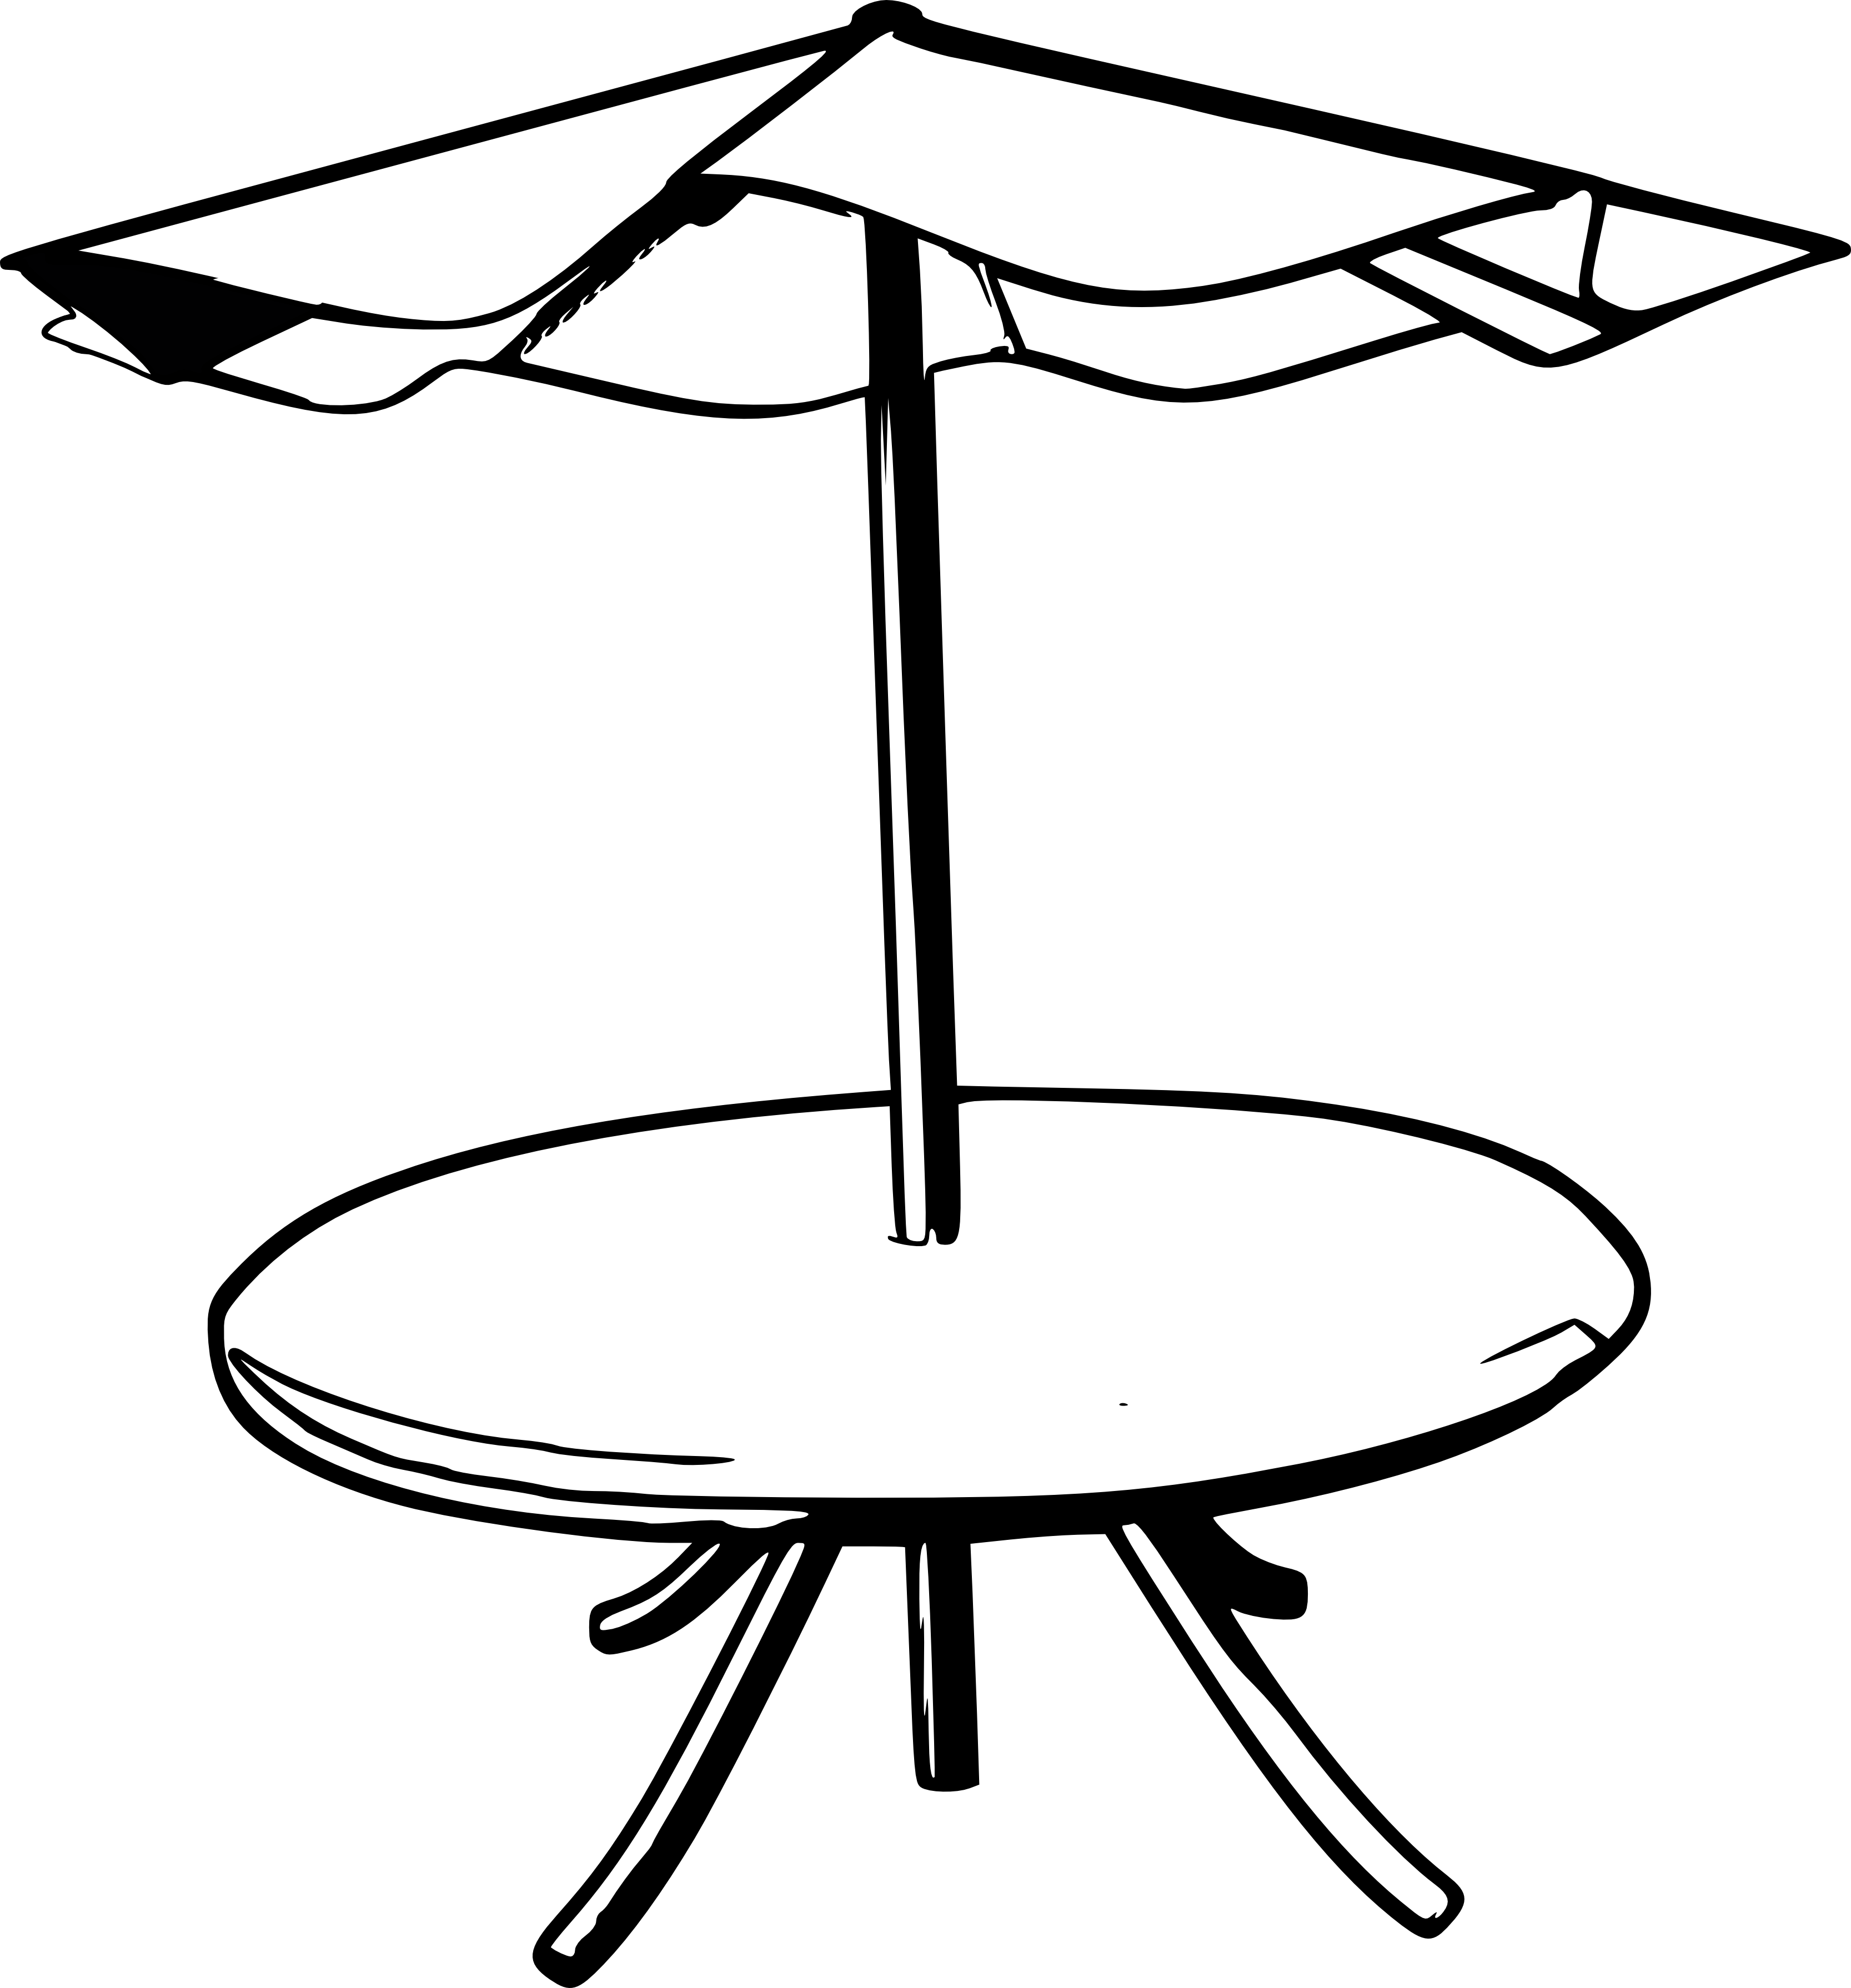 Free Umbrella Chair Cliparts, Download Free Umbrella Chair Cliparts png ...